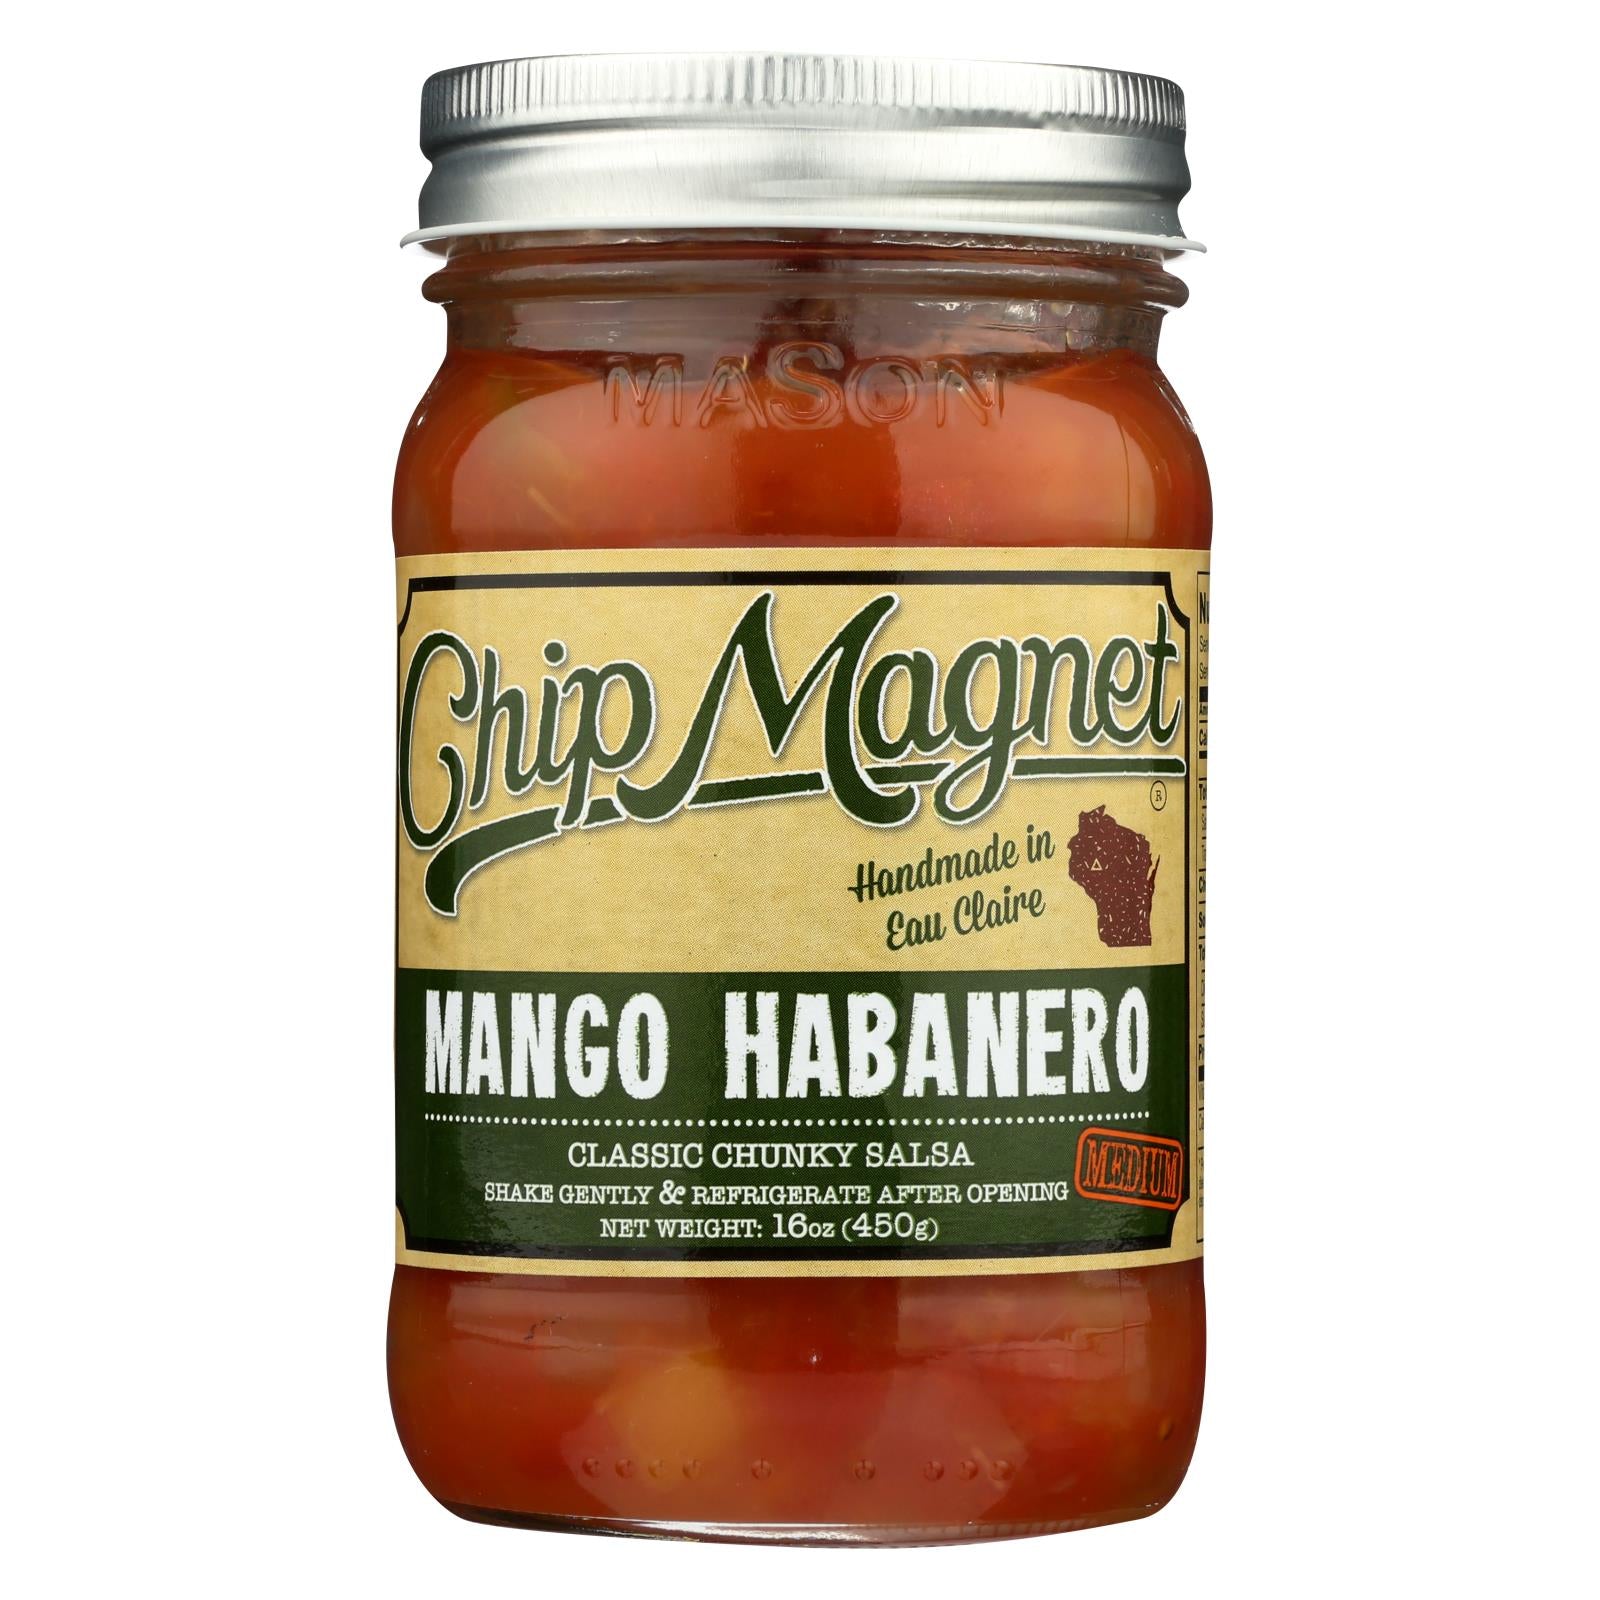 Chip Magnet Salsa Sauce Appeal, Chip Magnet Salsa Sauce Appeal - Salsa - Mango - Habanero - Case of 6 - 16 oz. (Pack of 6)